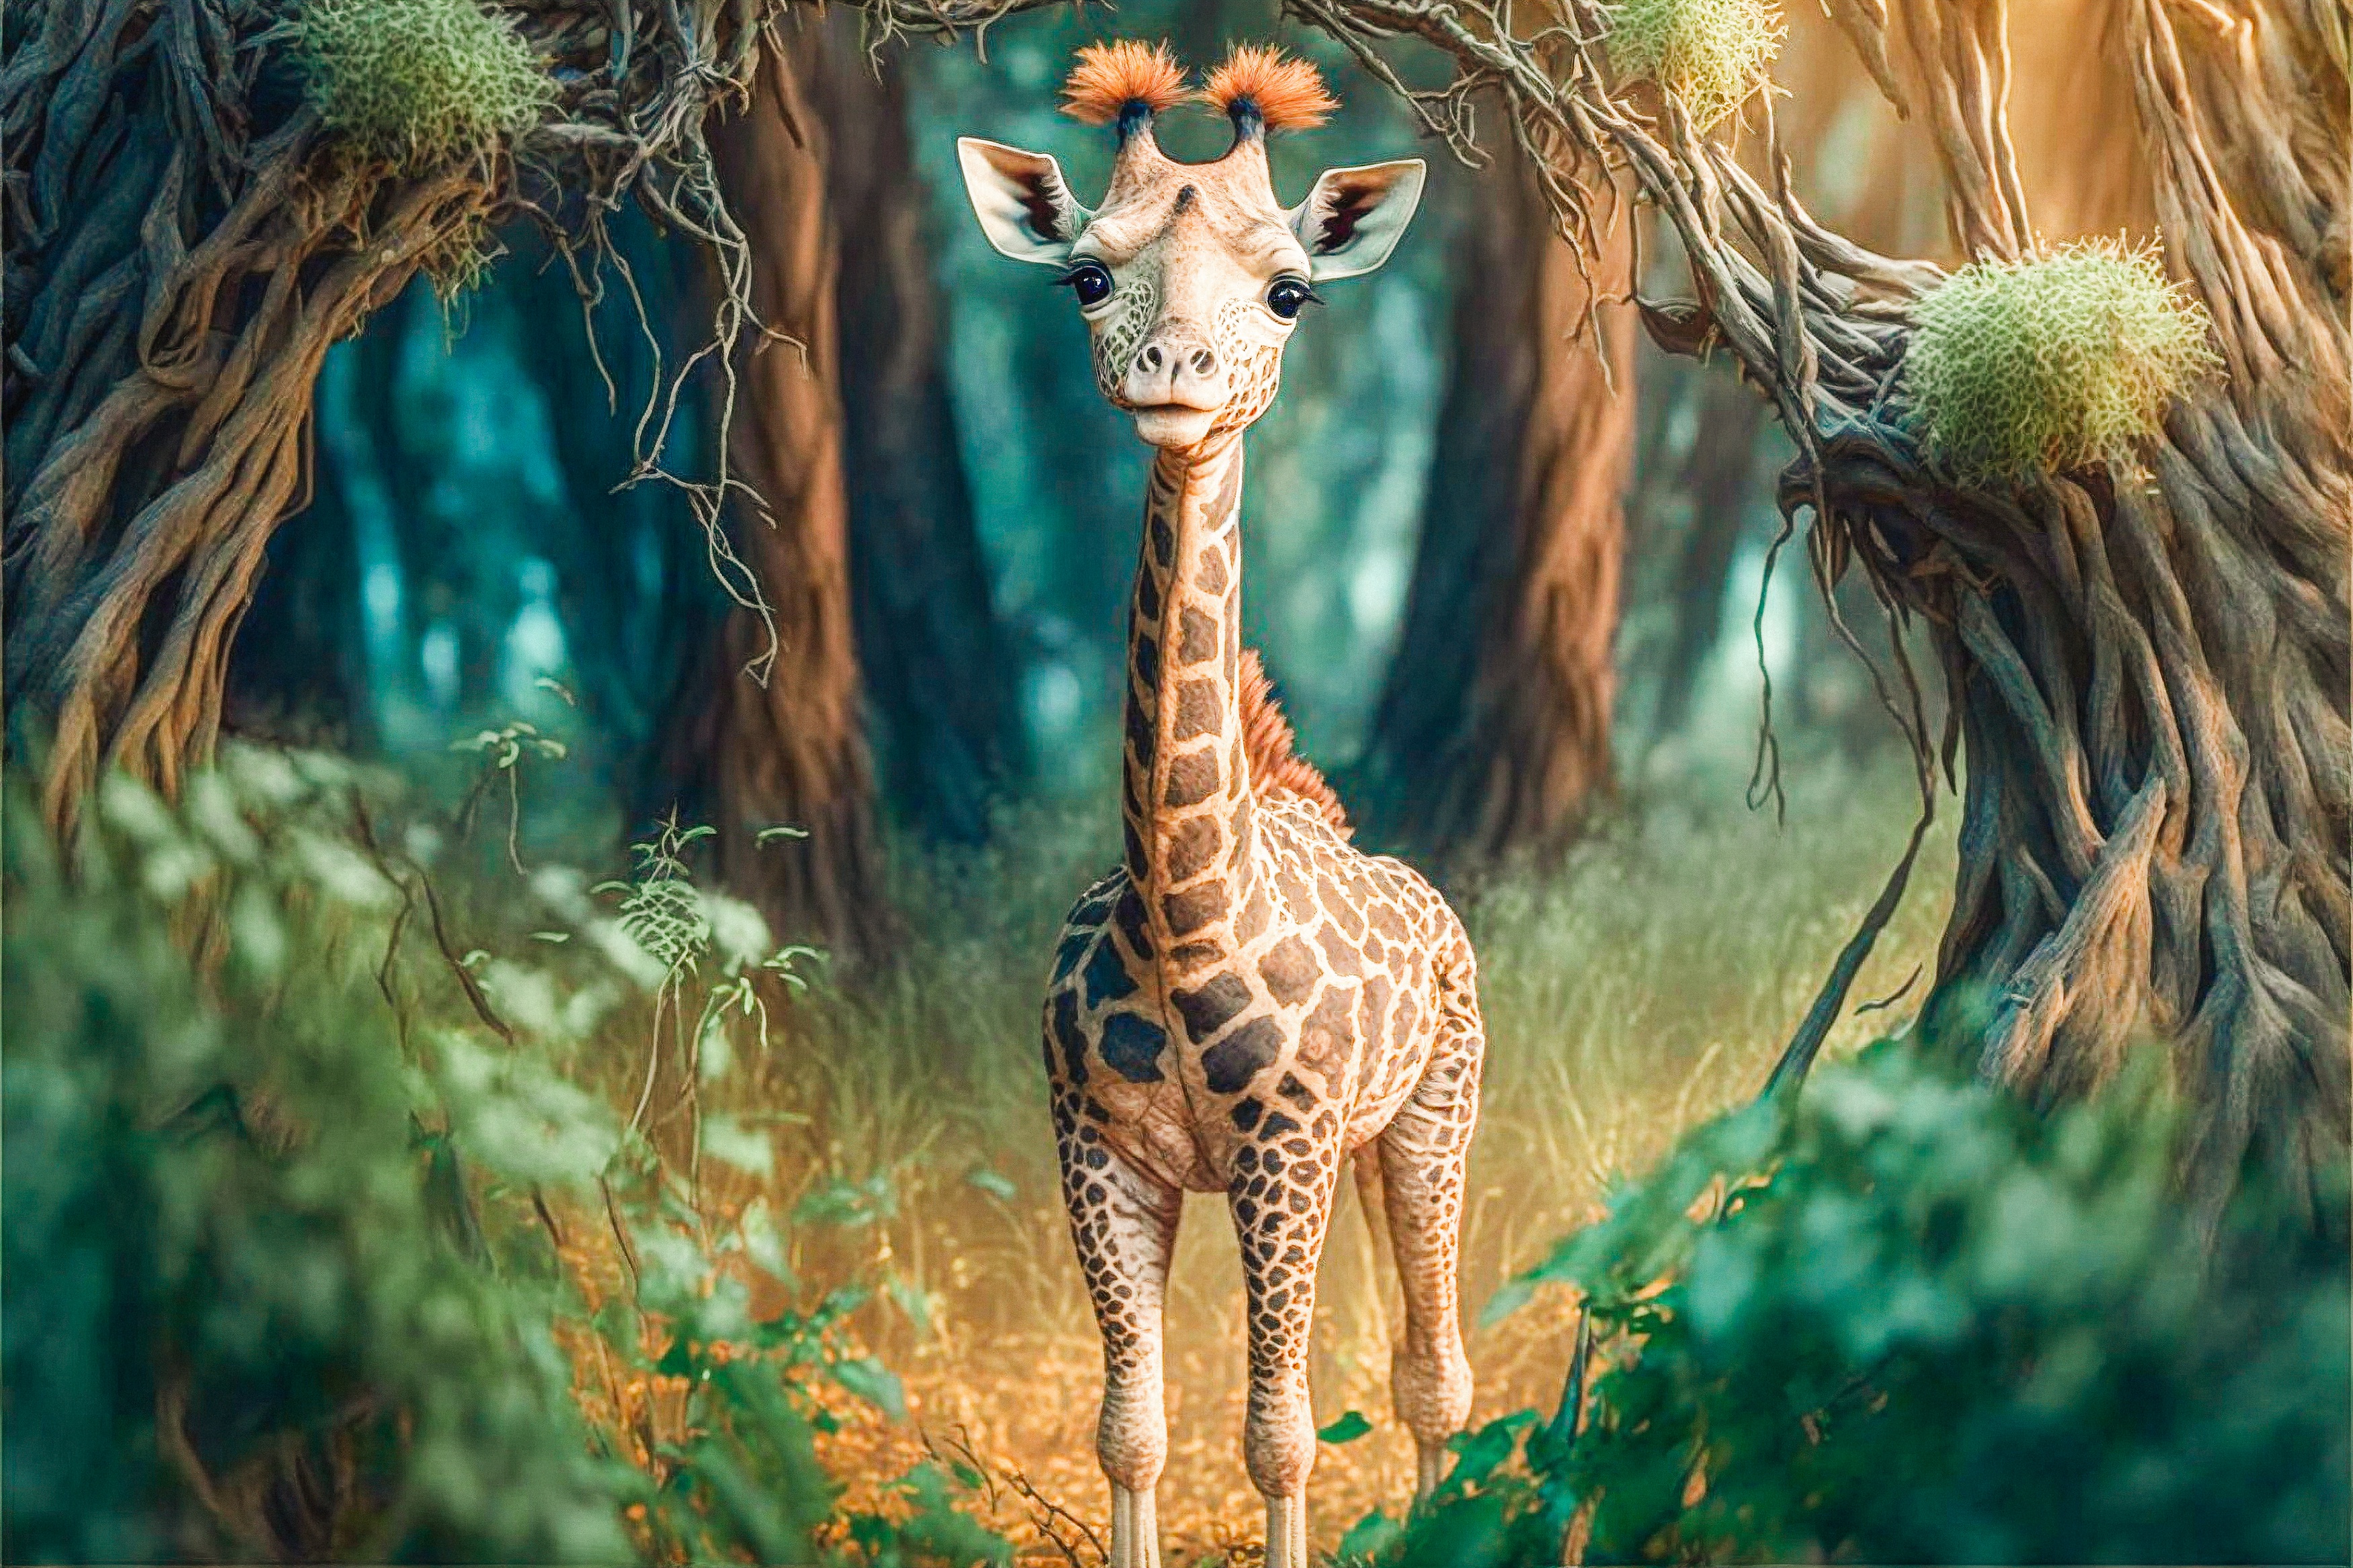 Download wallpaper 1125x2436 giraffe wild animals spots iphone x  1125x2436 hd background 1069